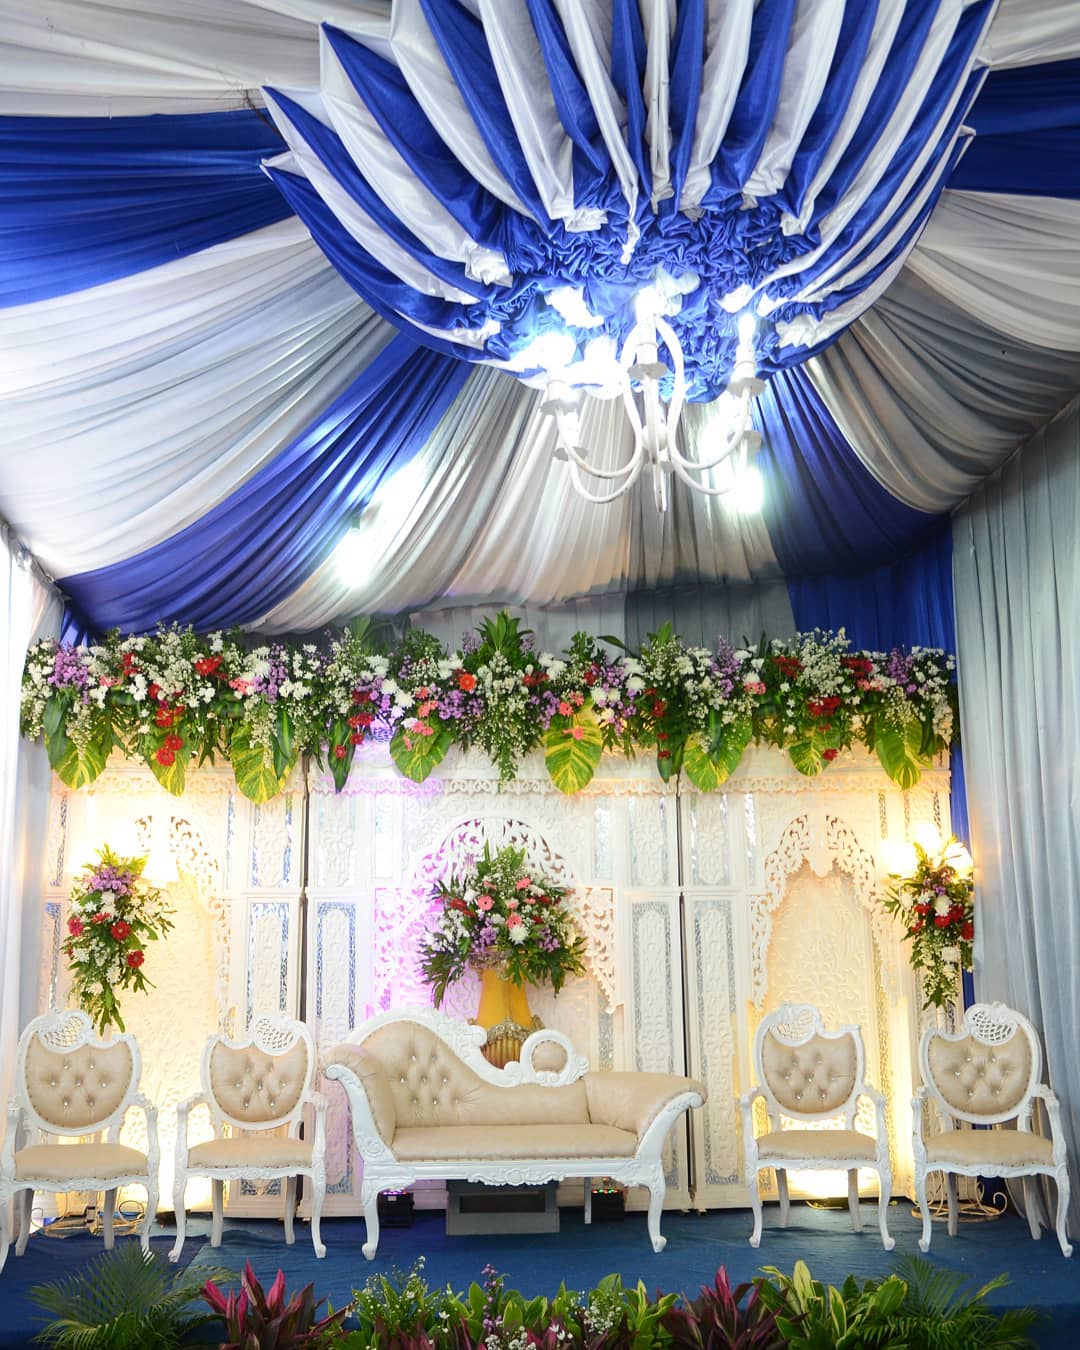  Harga Paket Pernikahan 2020 HANNA RIAS PENGANTIN DI JAKARTA